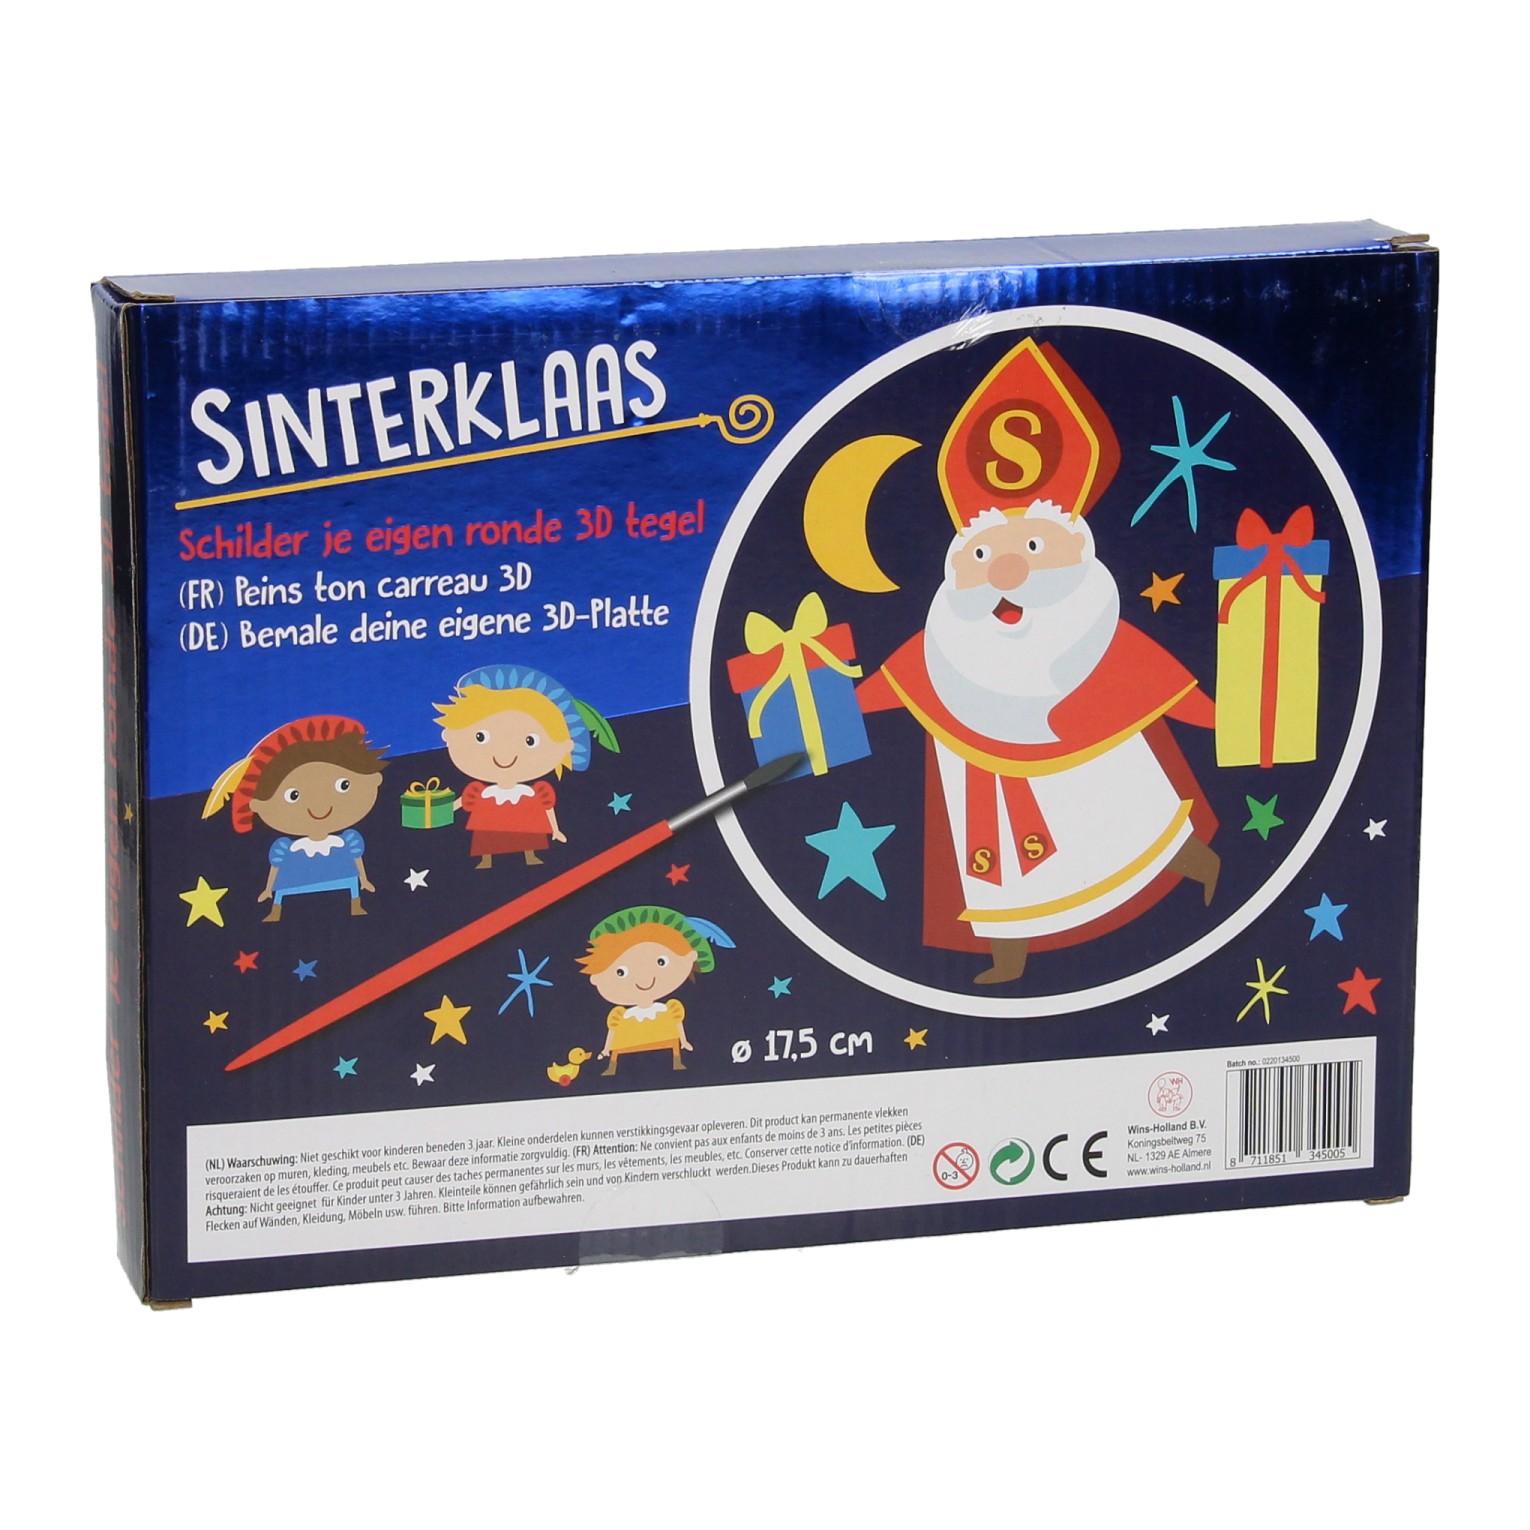 Paint your own Sinterklaas 3D tile